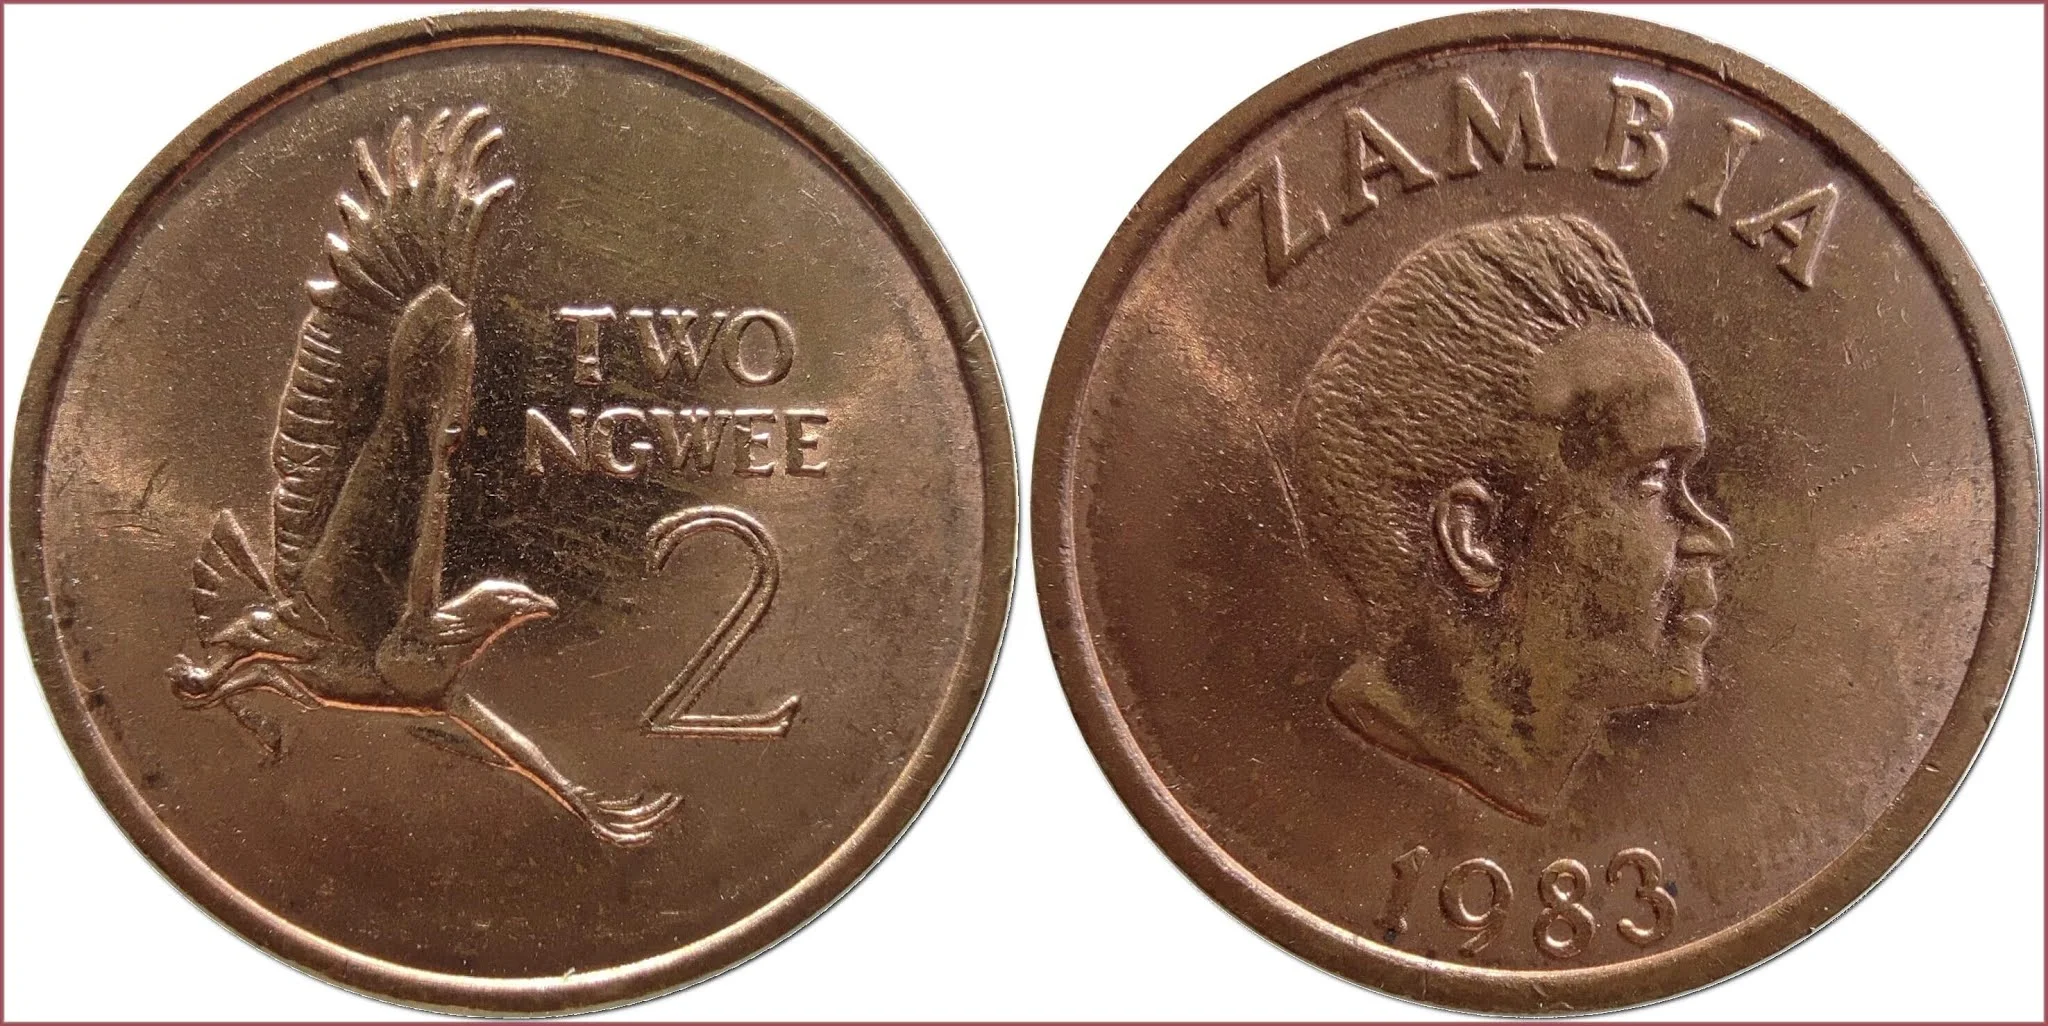 2 ngwee, 1983: Republic of Zambia